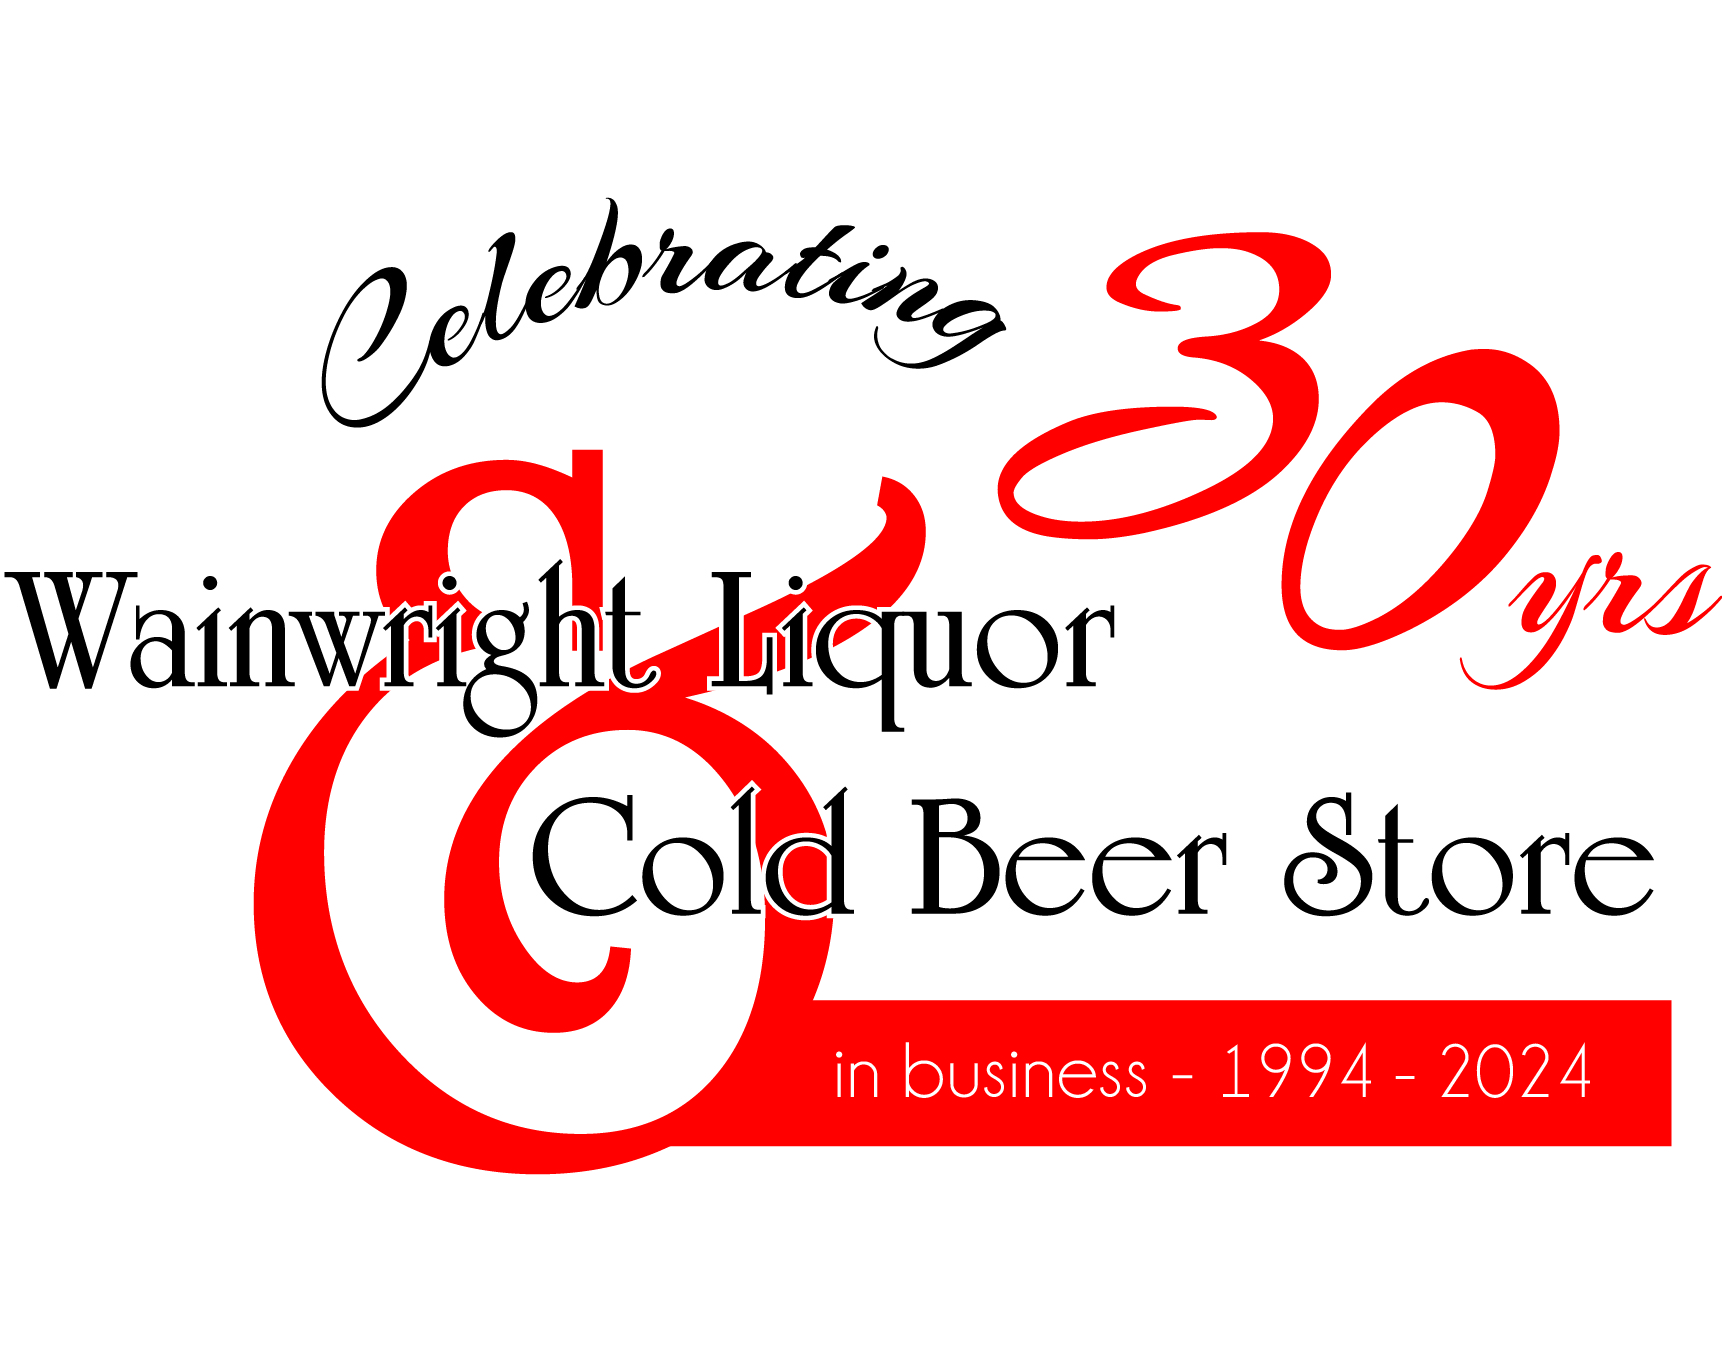 Wainwright Liquor & Cold Beer Store logo